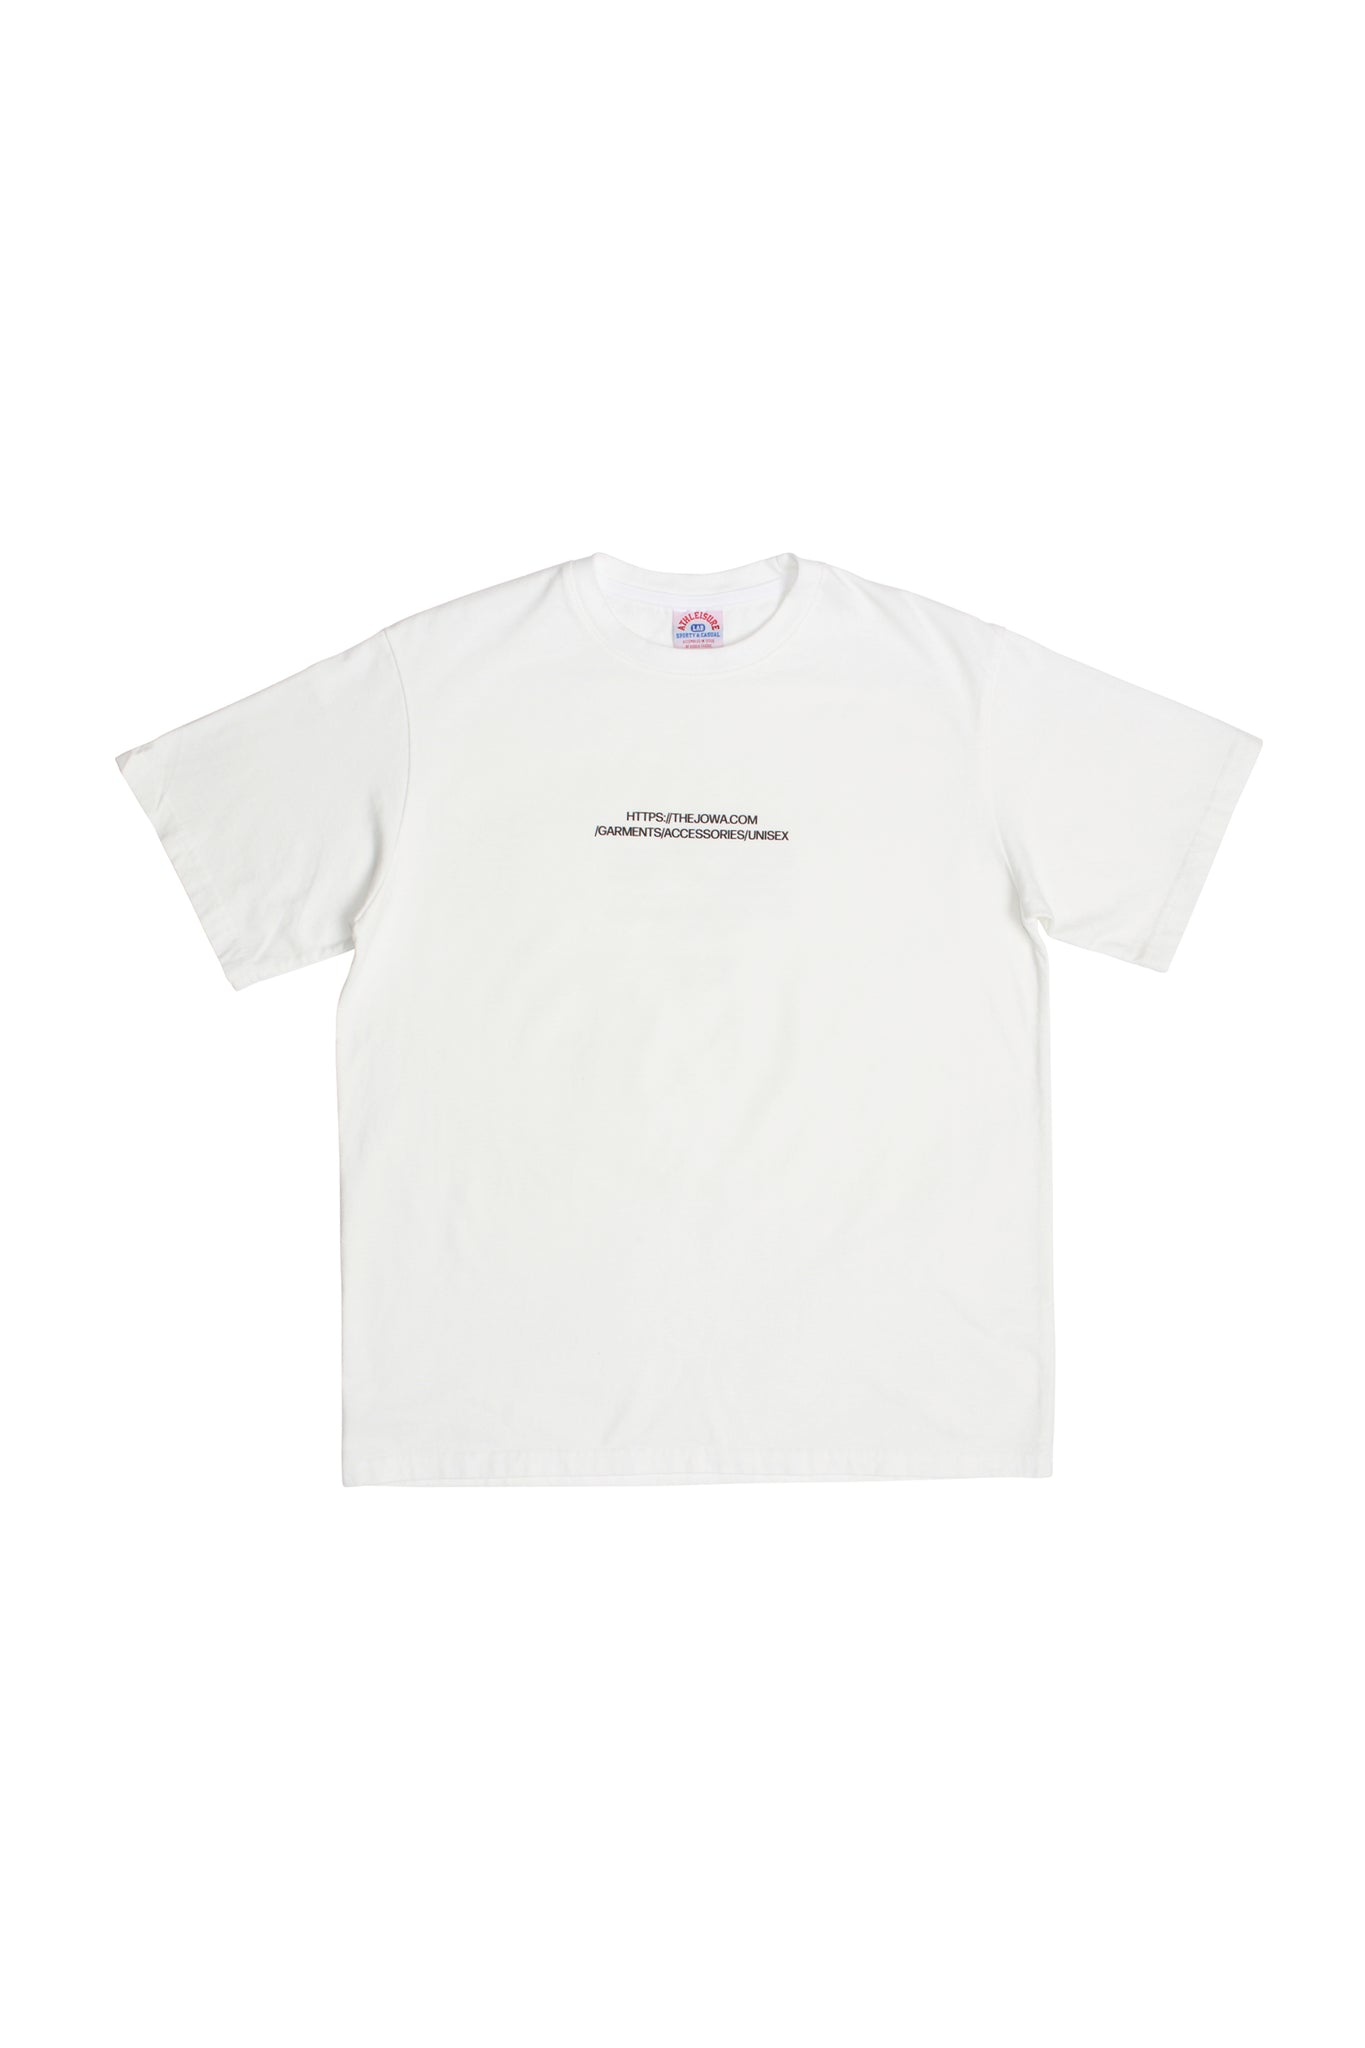 Jowa URL T-shirts in White